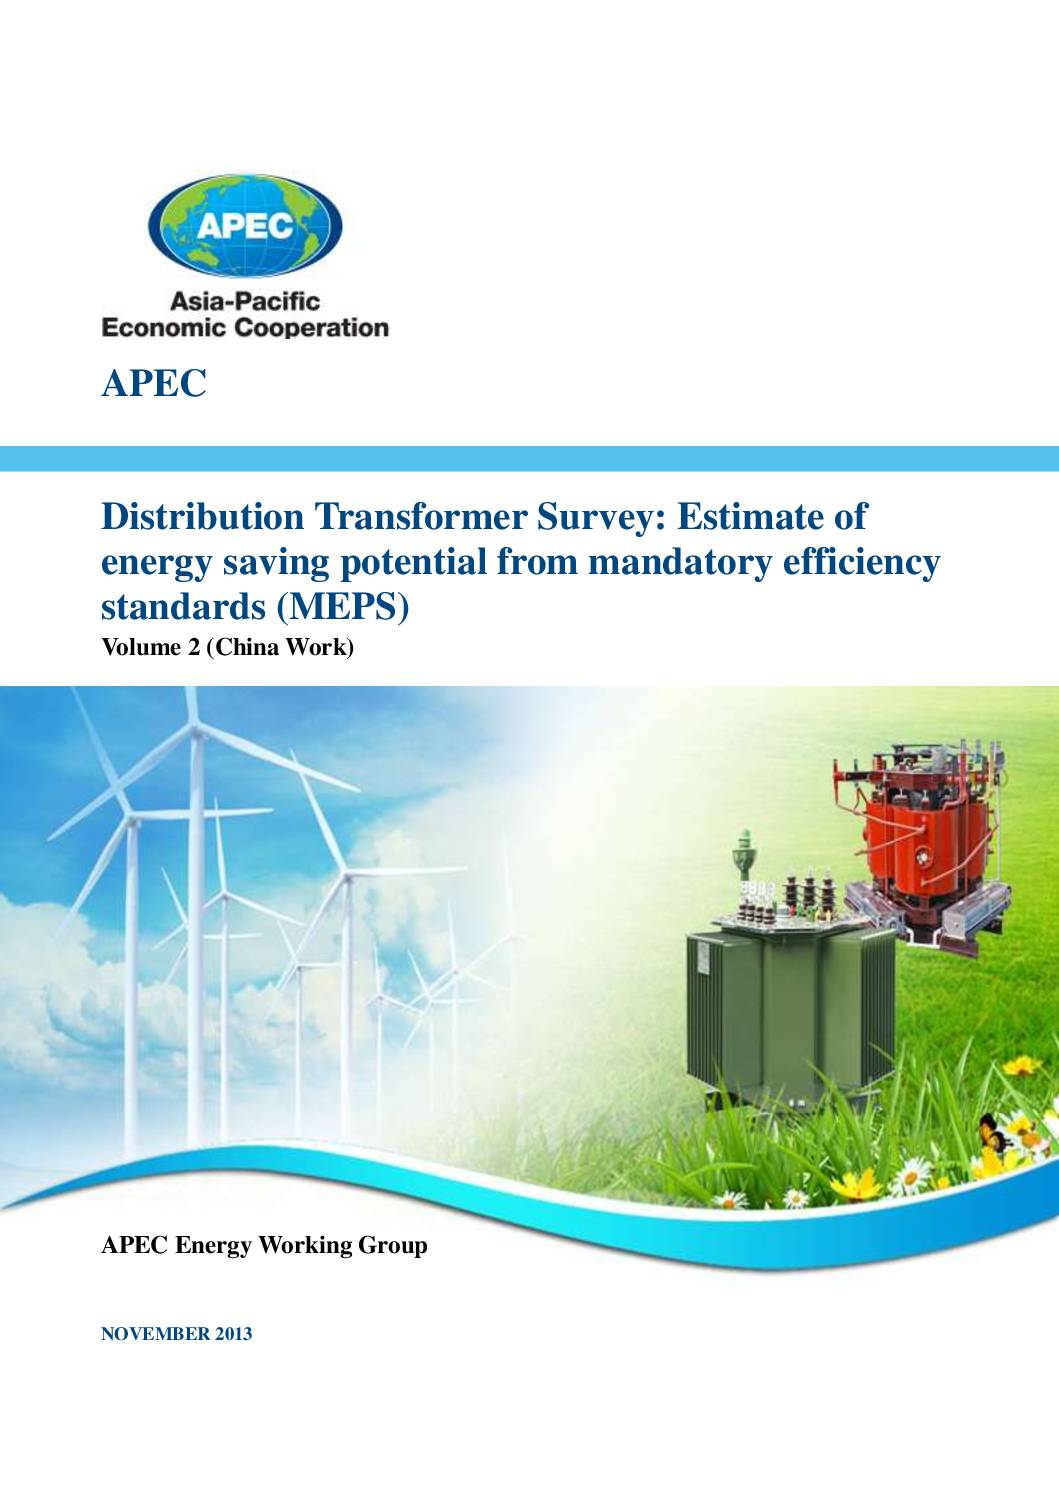 Distribution Transformer Survey: Estimate of Energy Savings Potential from Mandatory Efficiency Standards Volume 2 (China Work)